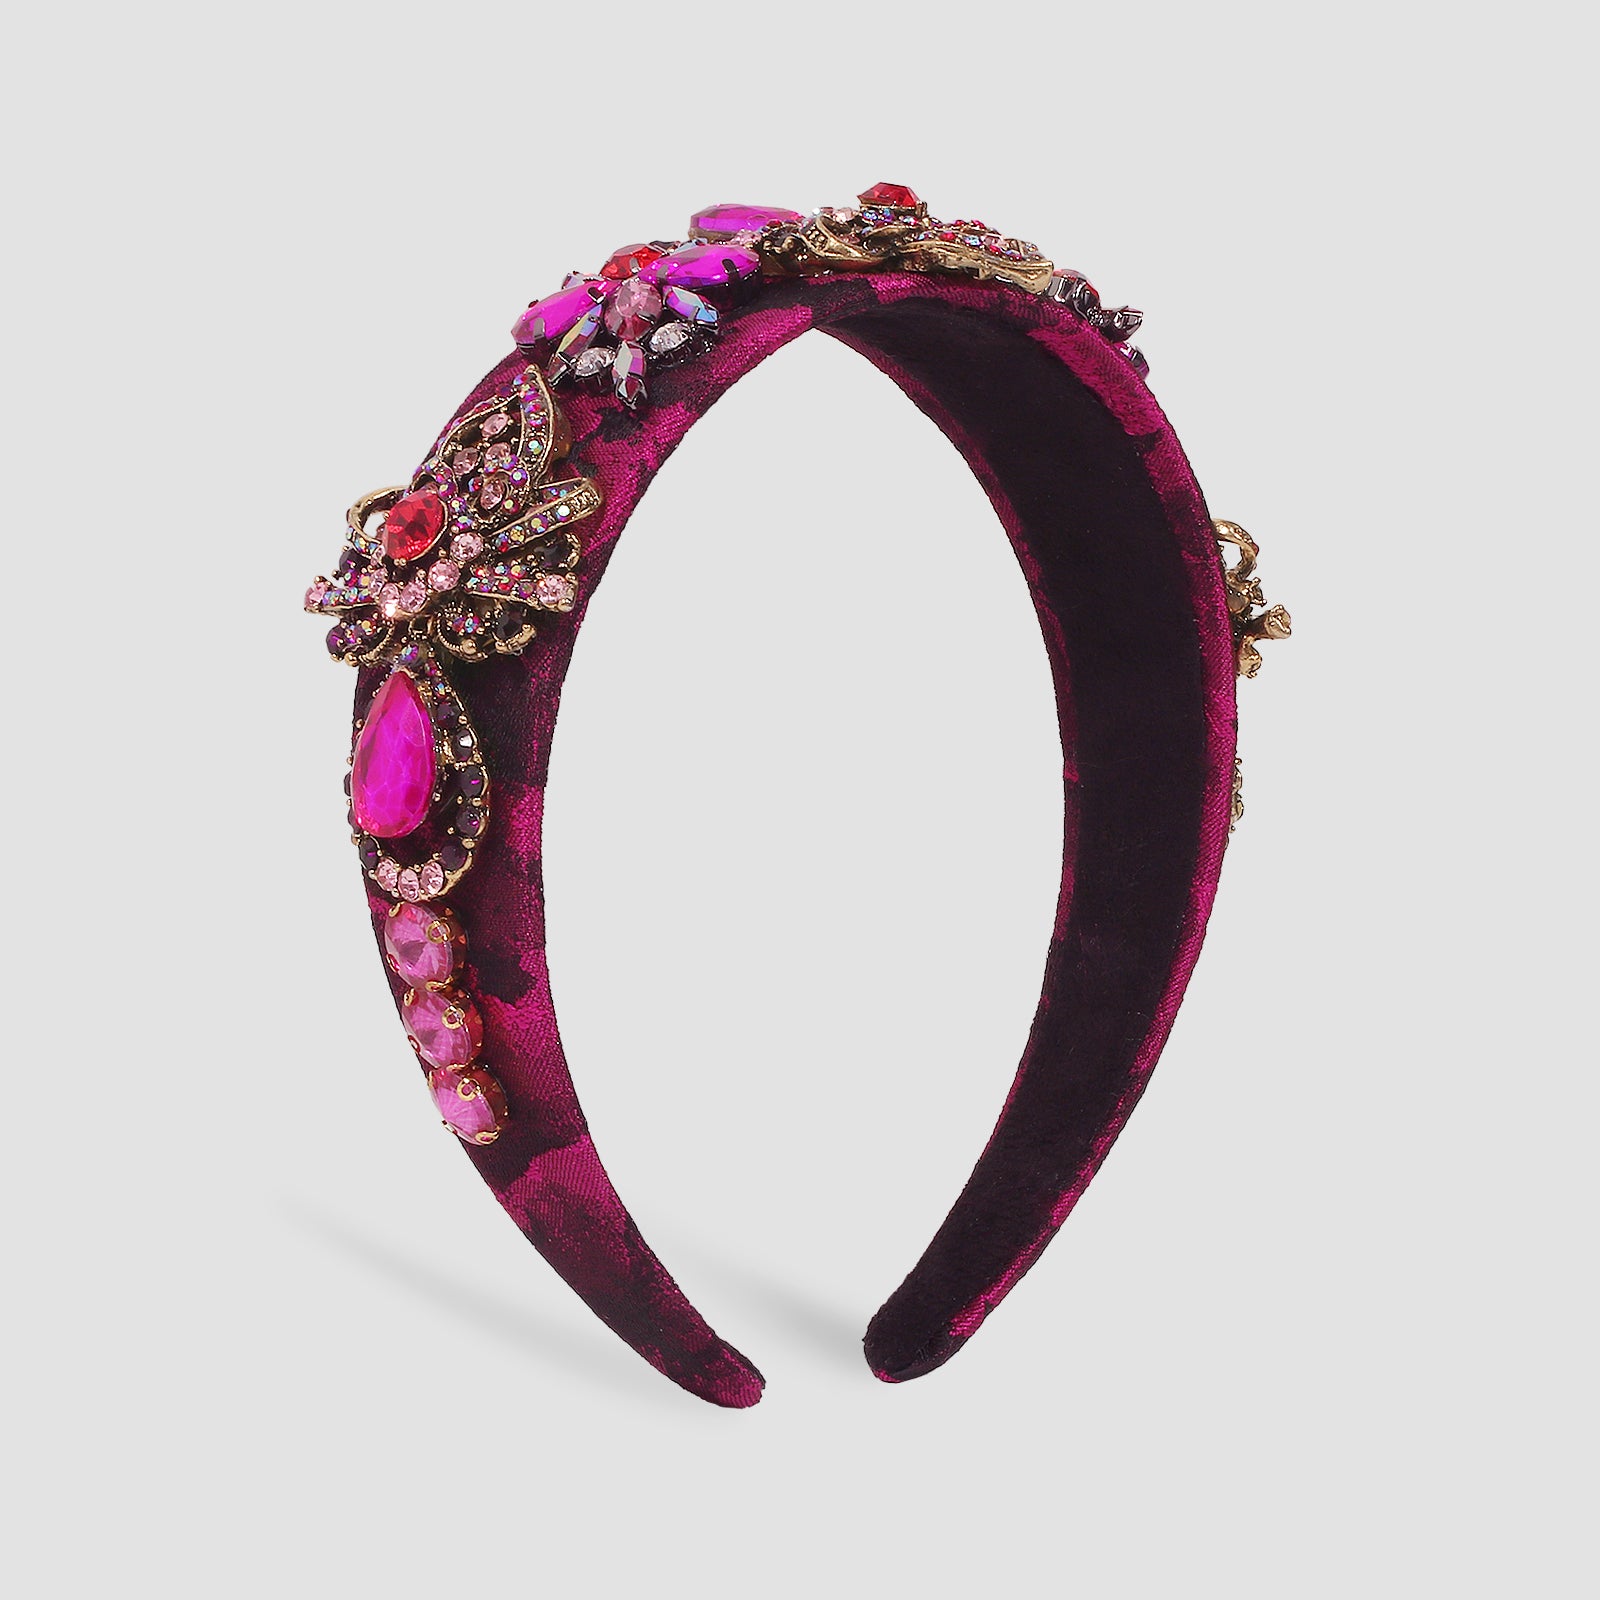 Luxurious Embroidery Flowers Bejeweled Rhinestone Headband medyjewelry